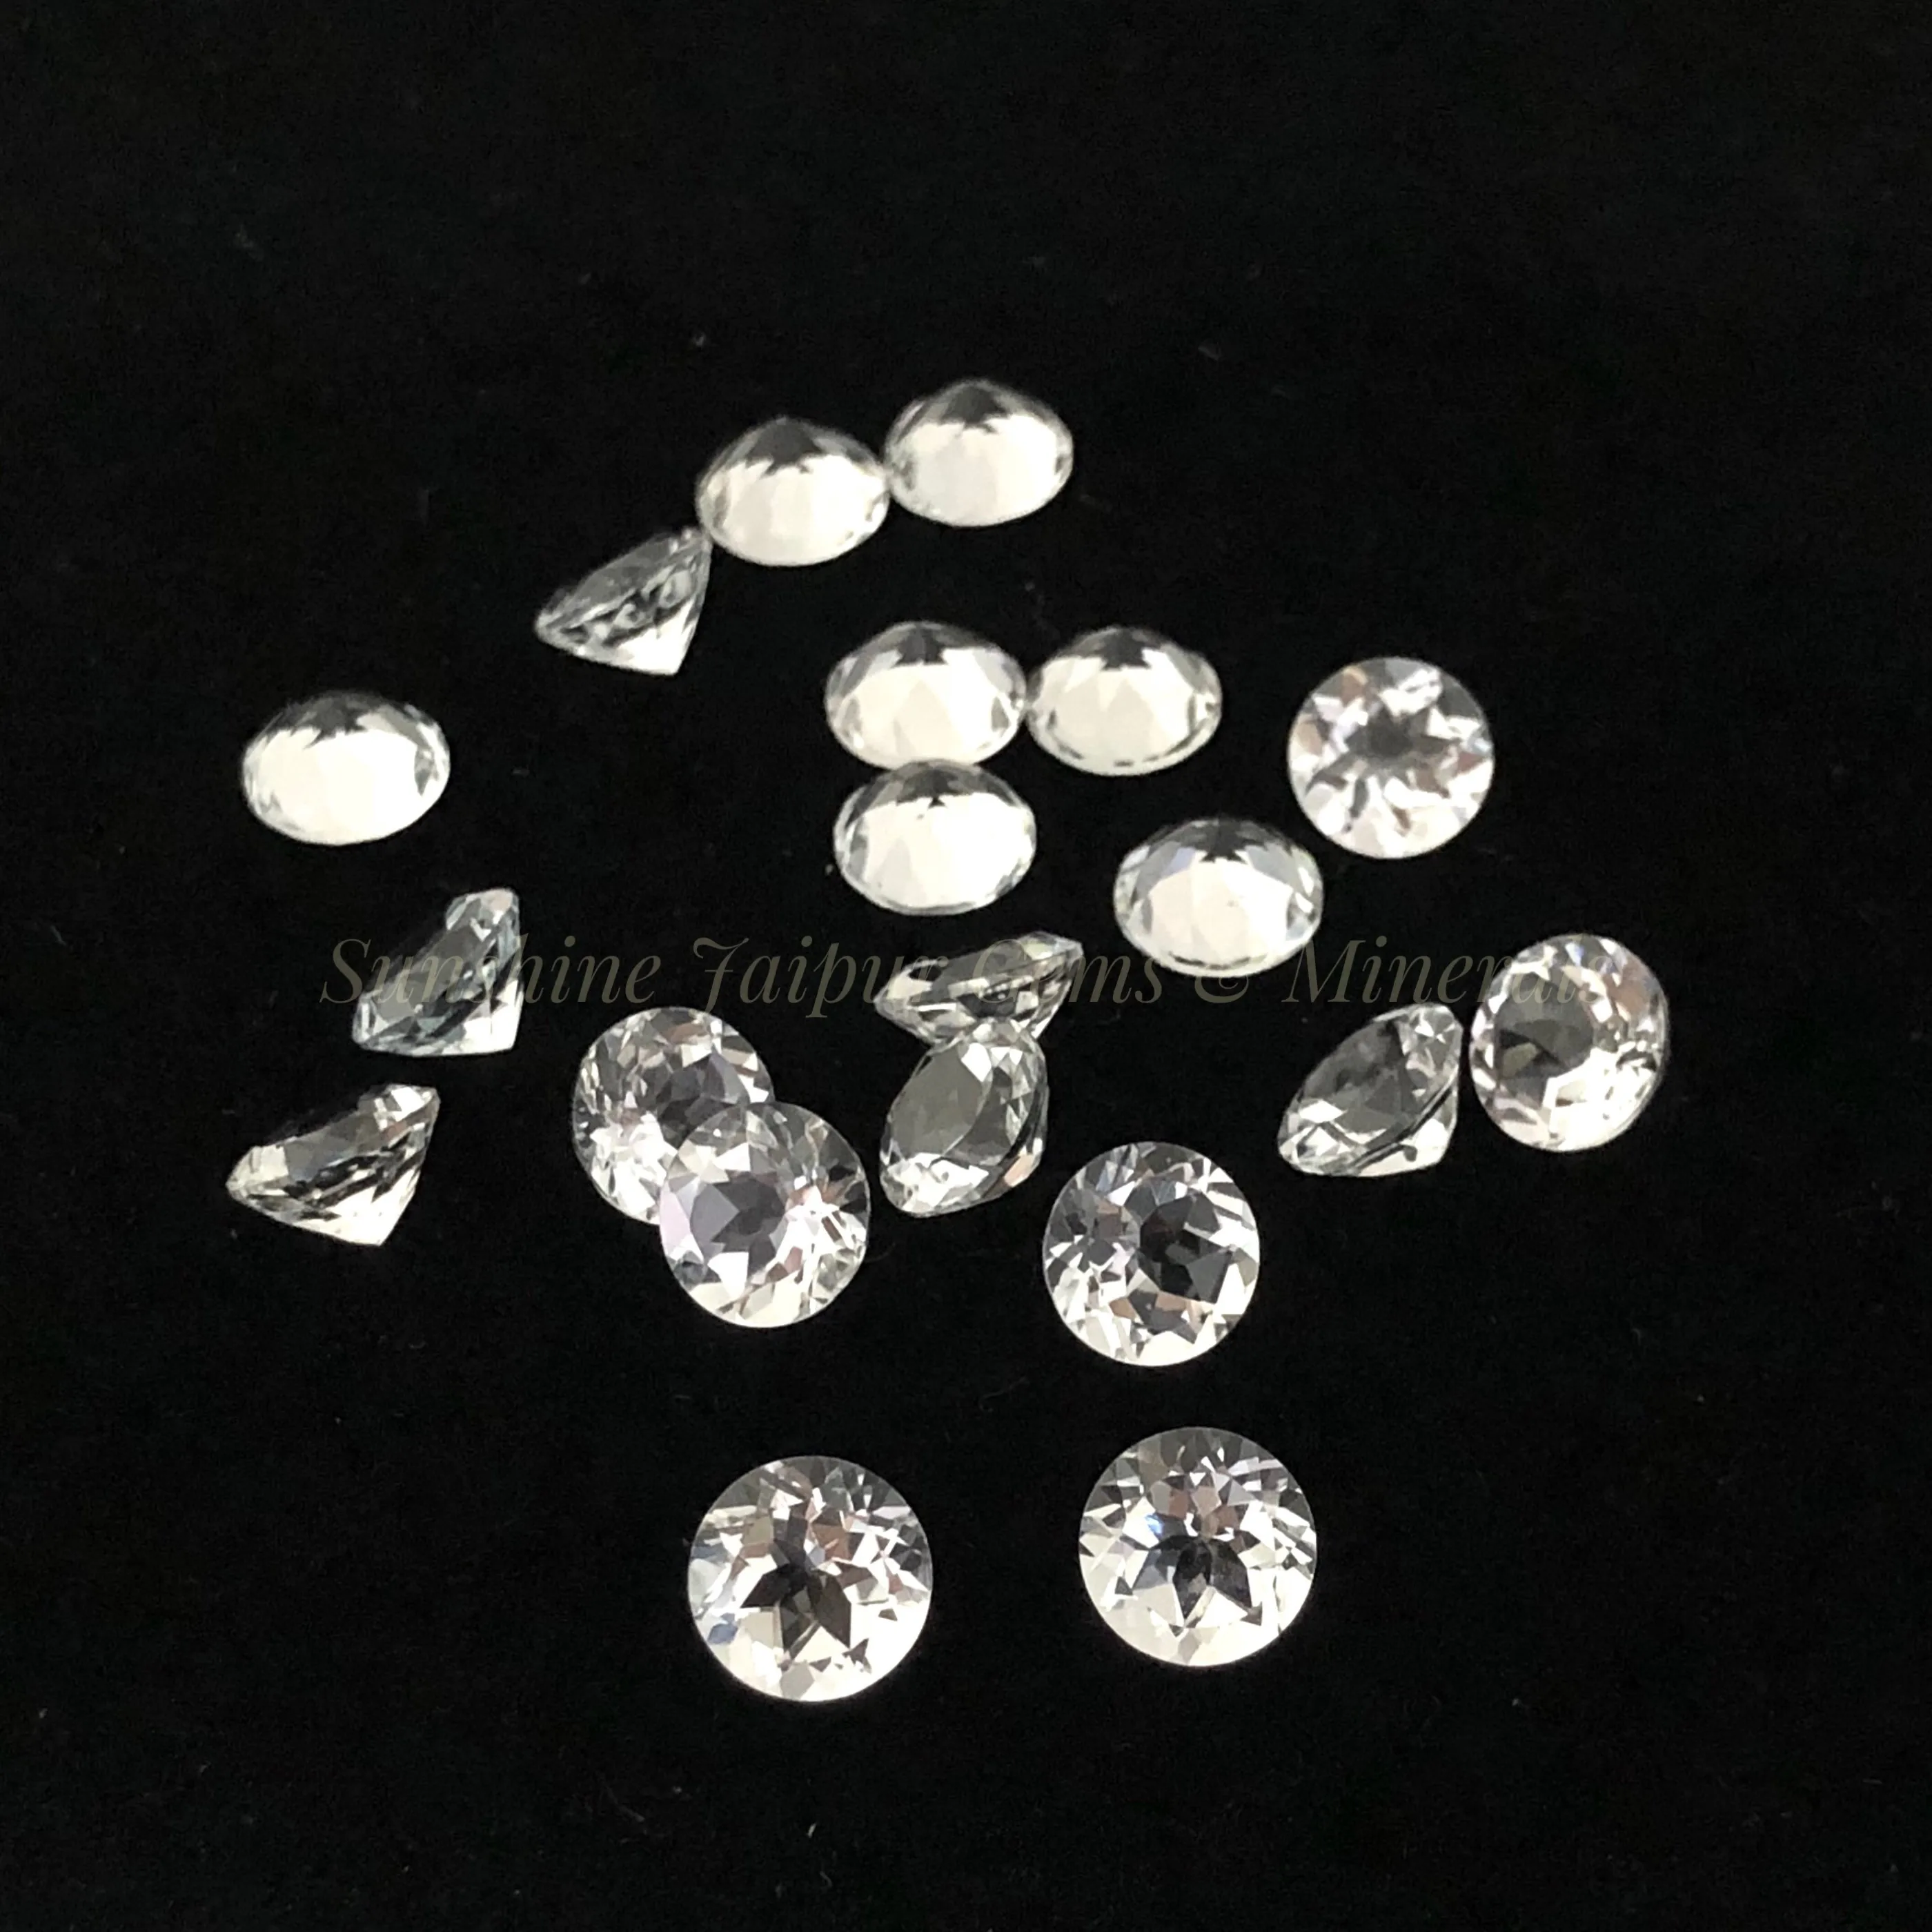 Details about   Rarest Lot Natural Crystal Quartz 15X15 mm Round Faceted Cut Loose Gemstone 